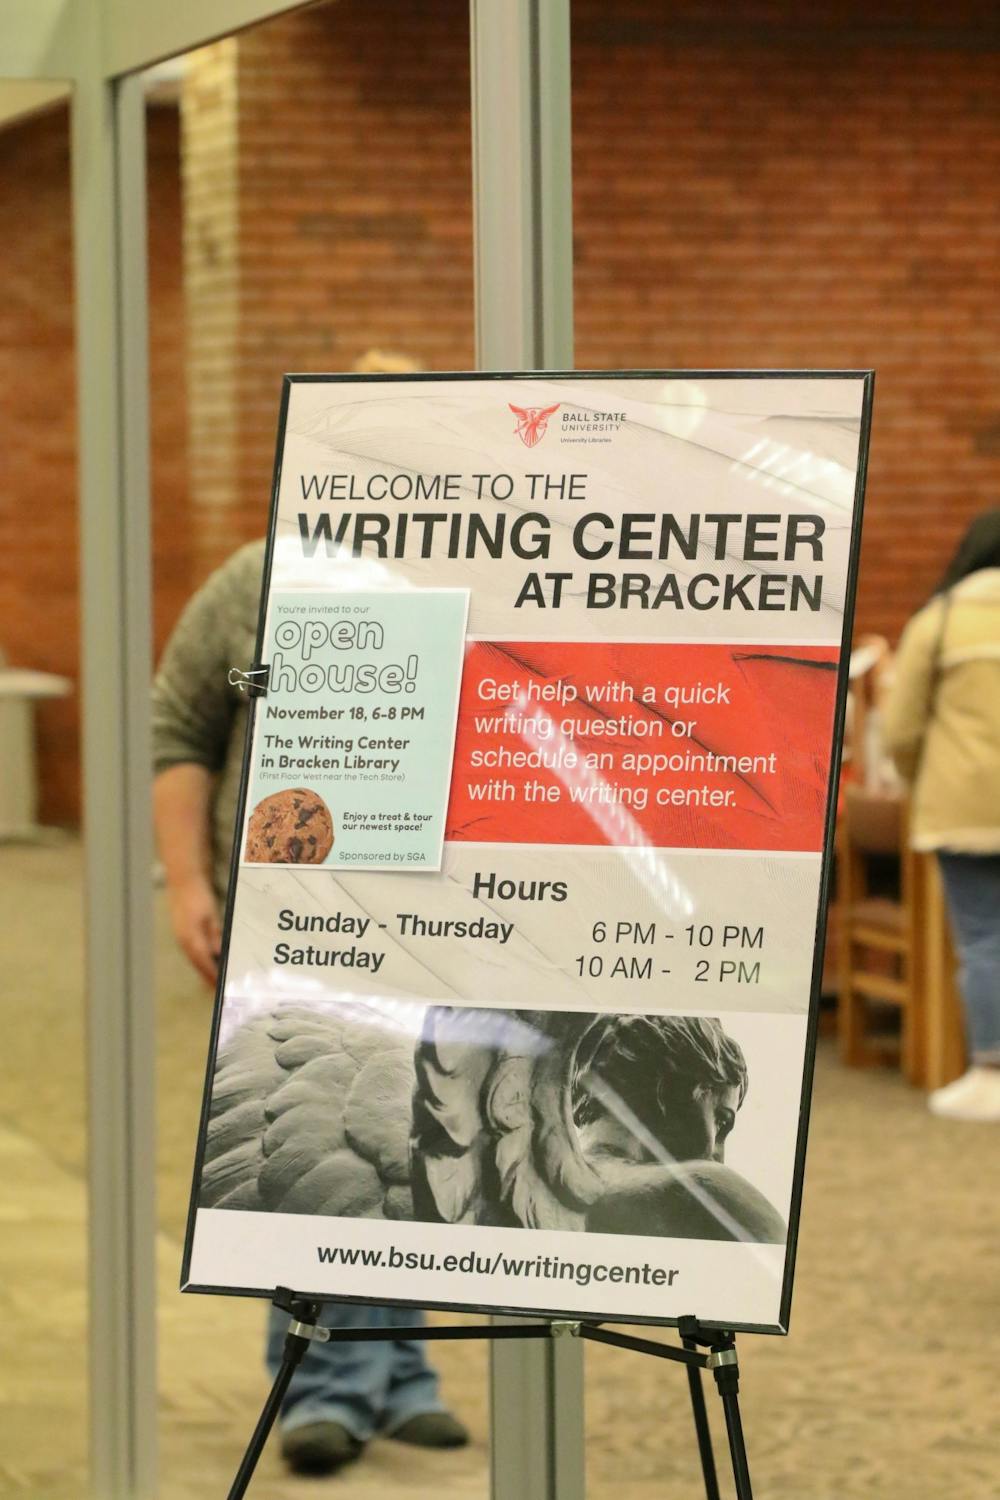 Ball State hosts open house for Bracken Library’s new Writing Center 